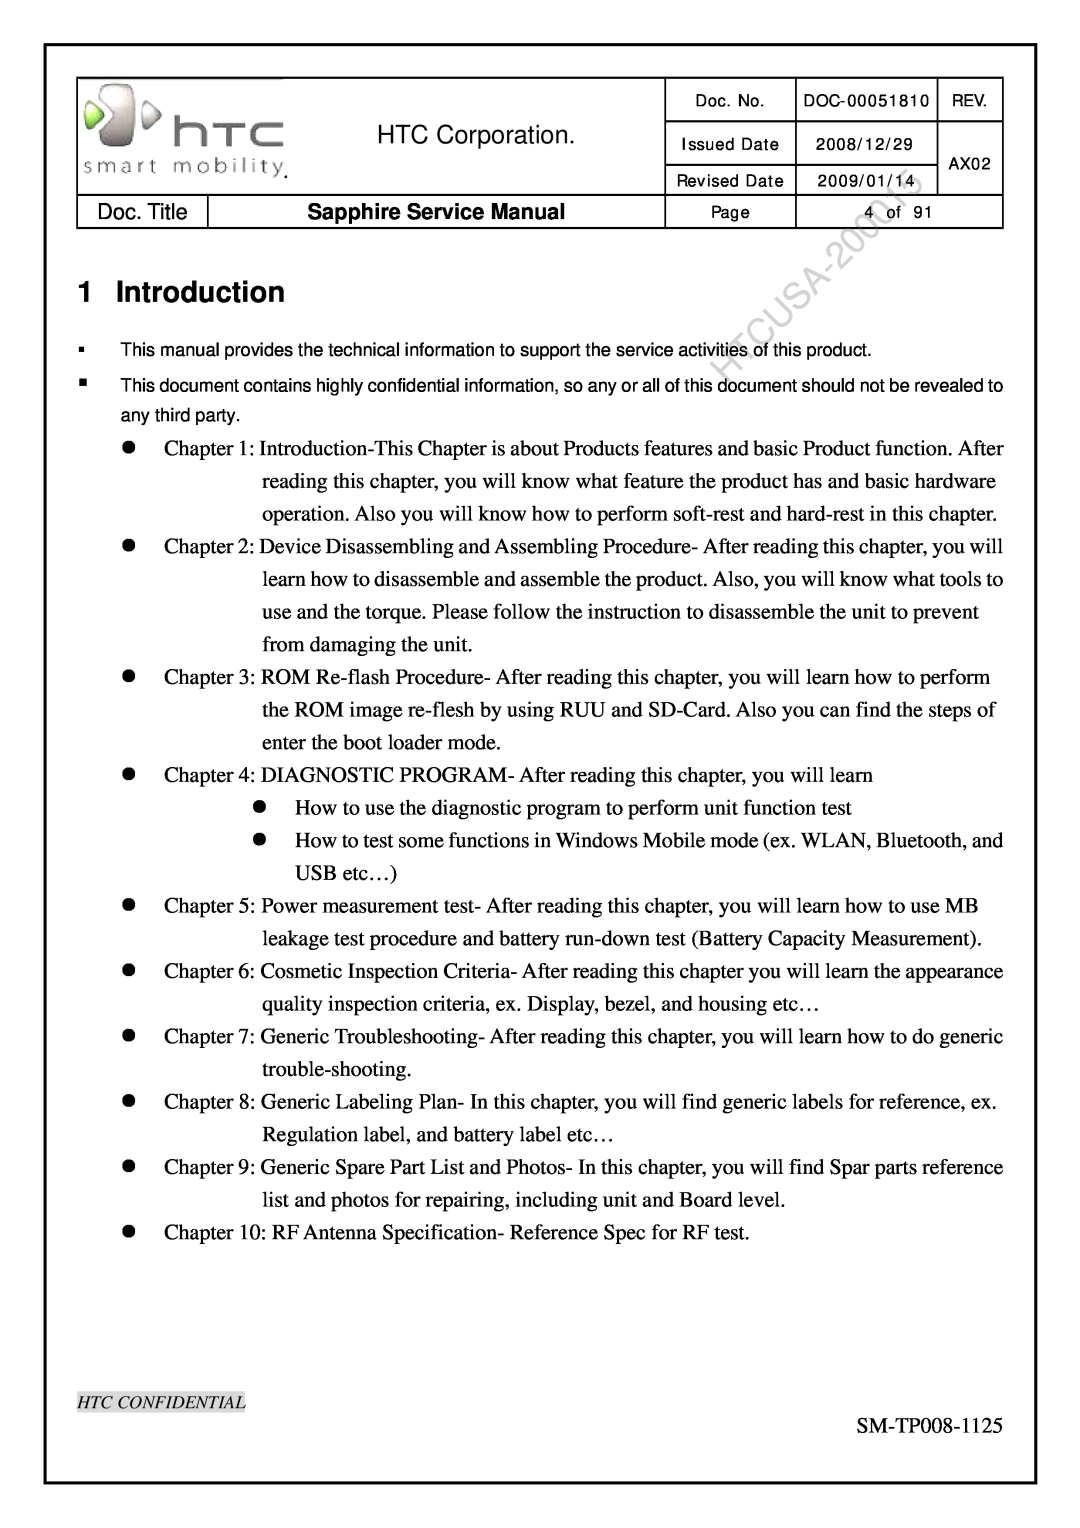 HTC SM-TP008-1125 service manual Introduction, HTC Corporation, Sapphire Service Manual 